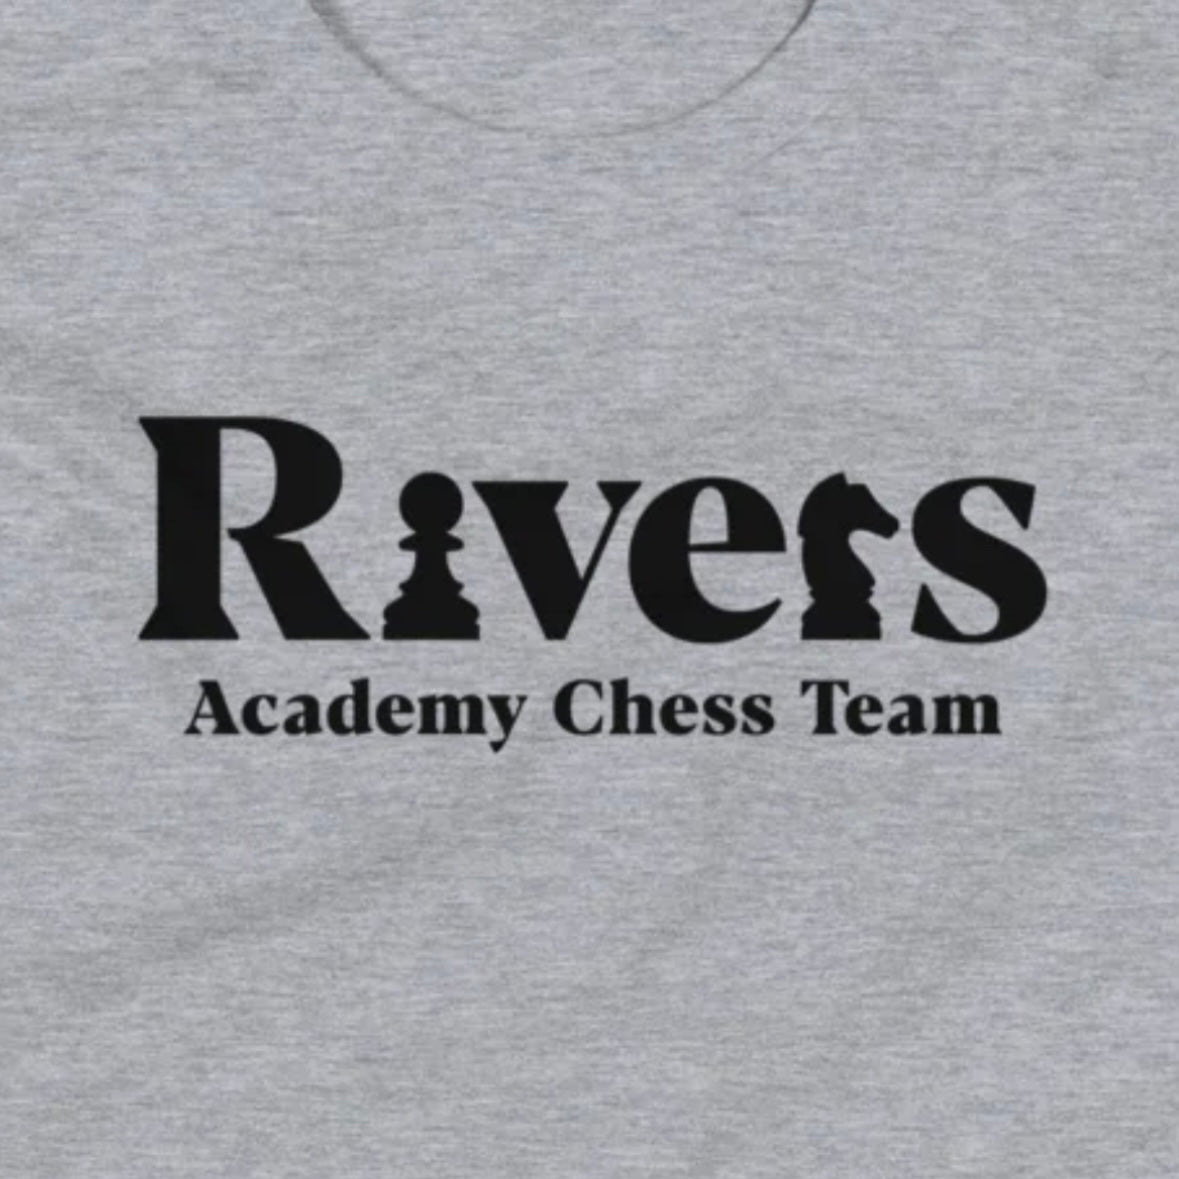 Rivers Academy Chess Team Premium Youth Tee